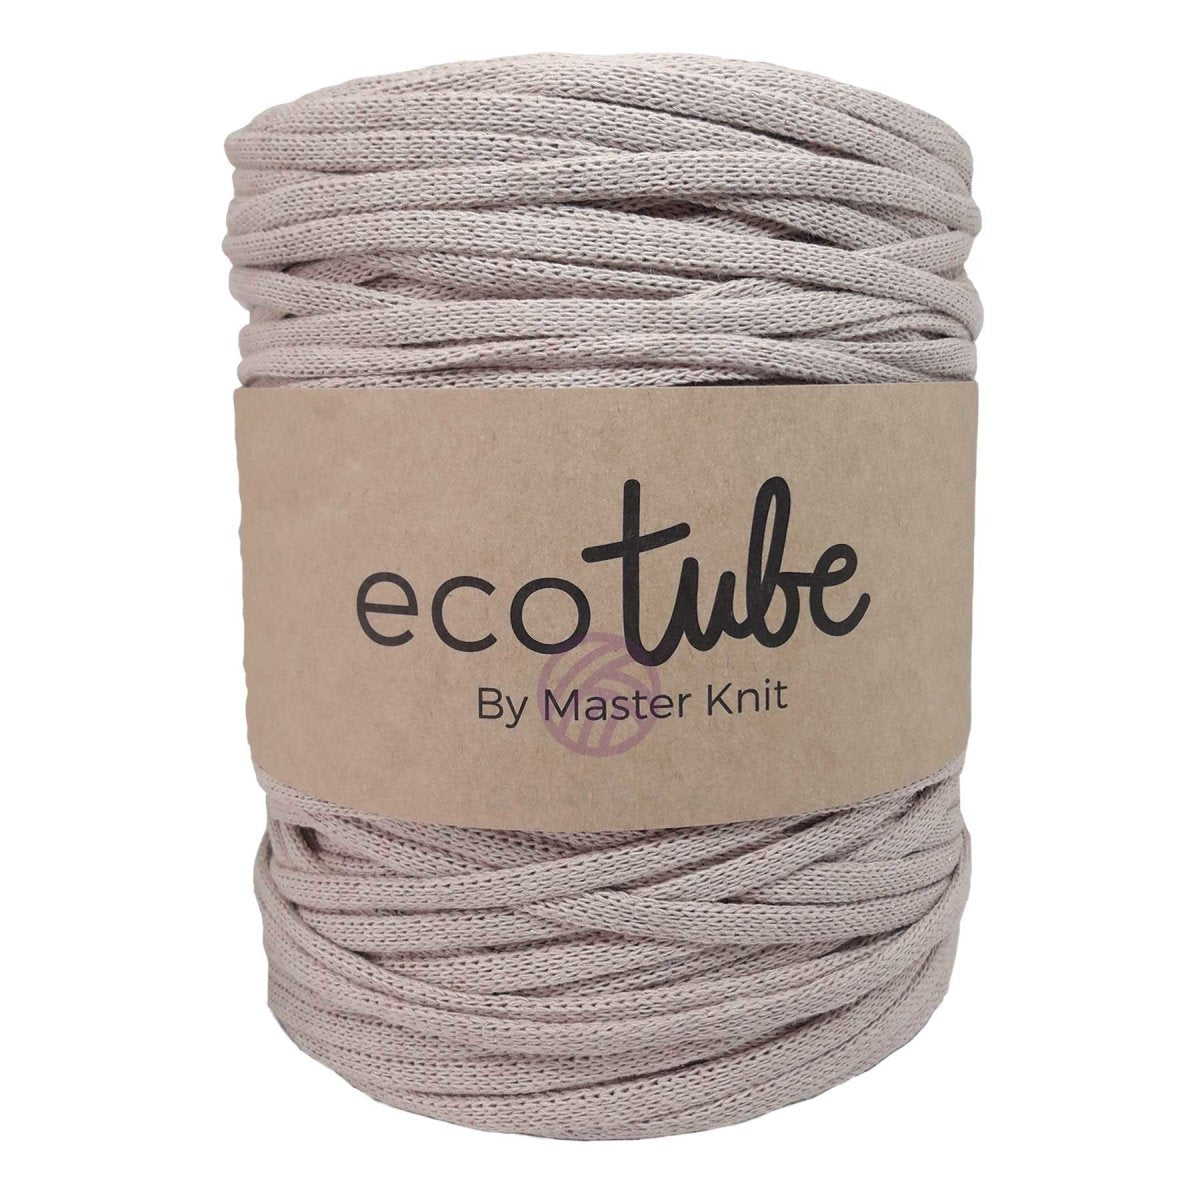 ECO TUBE - Crochetstores9380-855